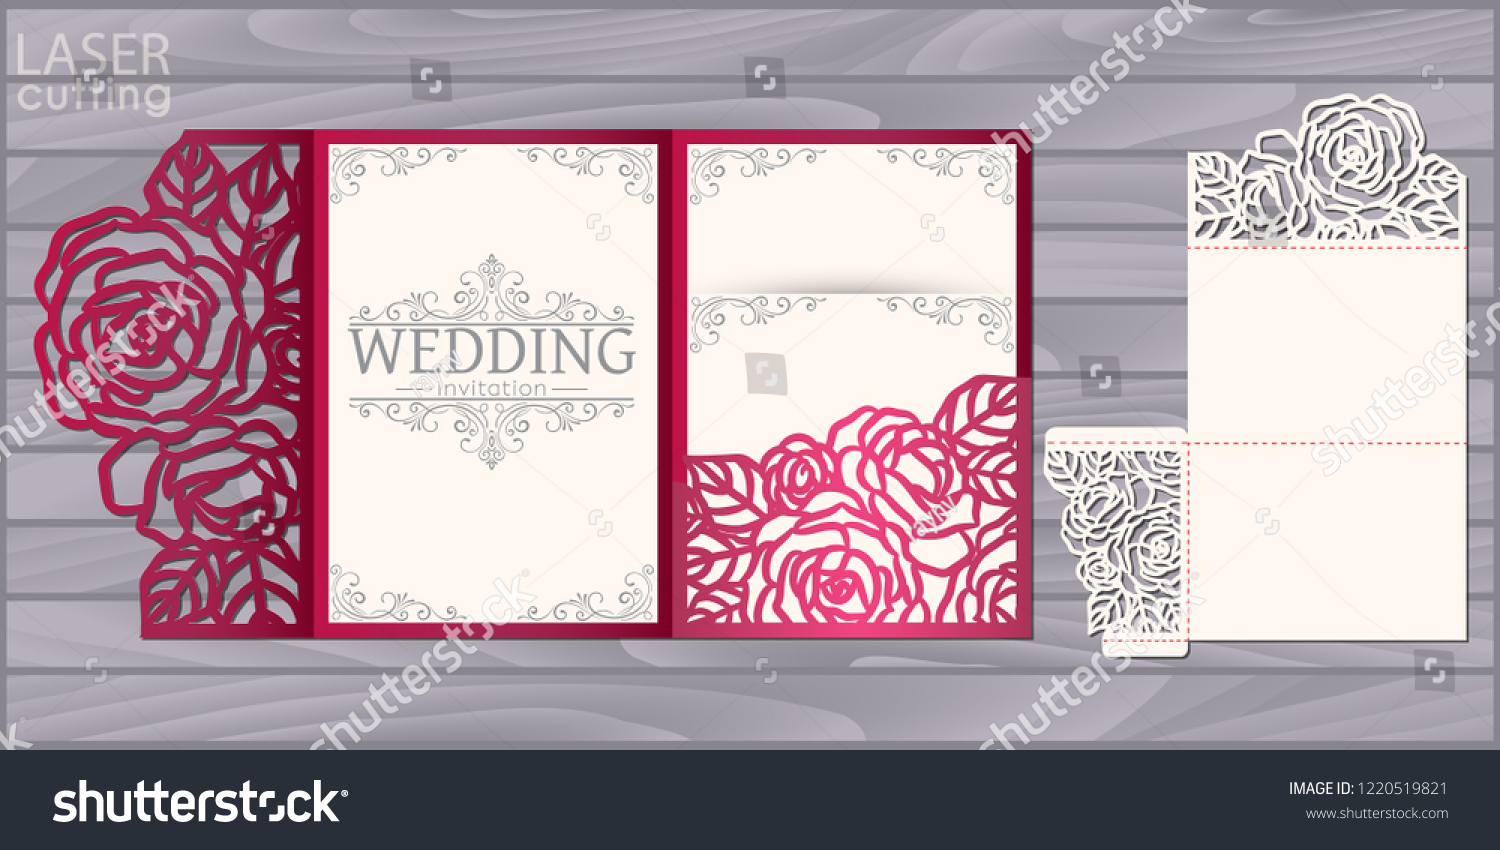 SVG of Die laser cut wedding card vector template. Invitation pocket tri fold envelope with roses pattern. Wedding lace invitation mockup. svg